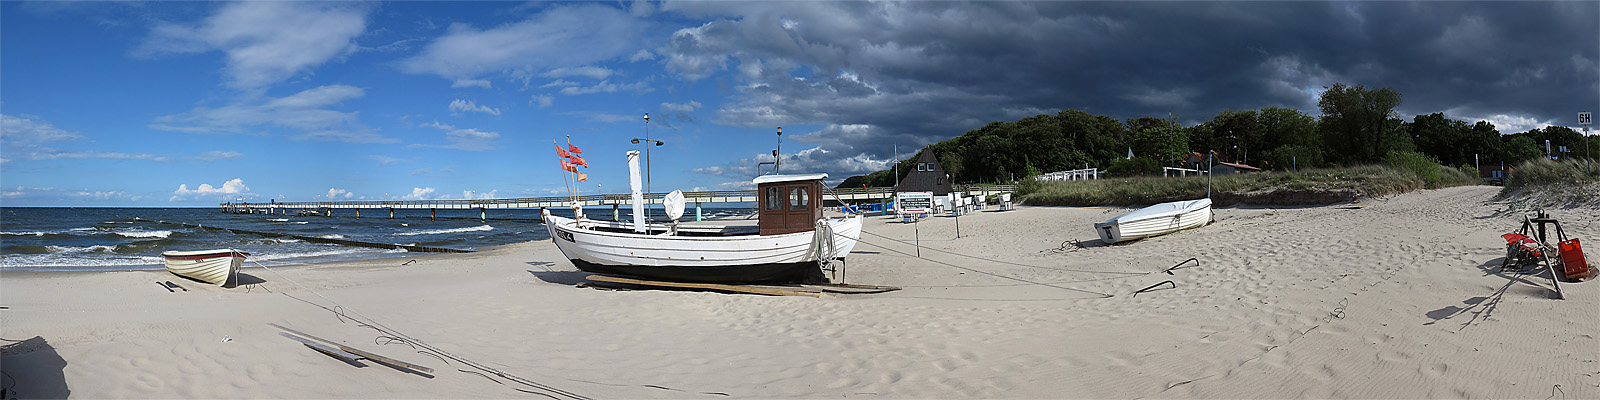 Panorama: Koserow Fischerboot am Strand - Motivnummer: use-kos-02